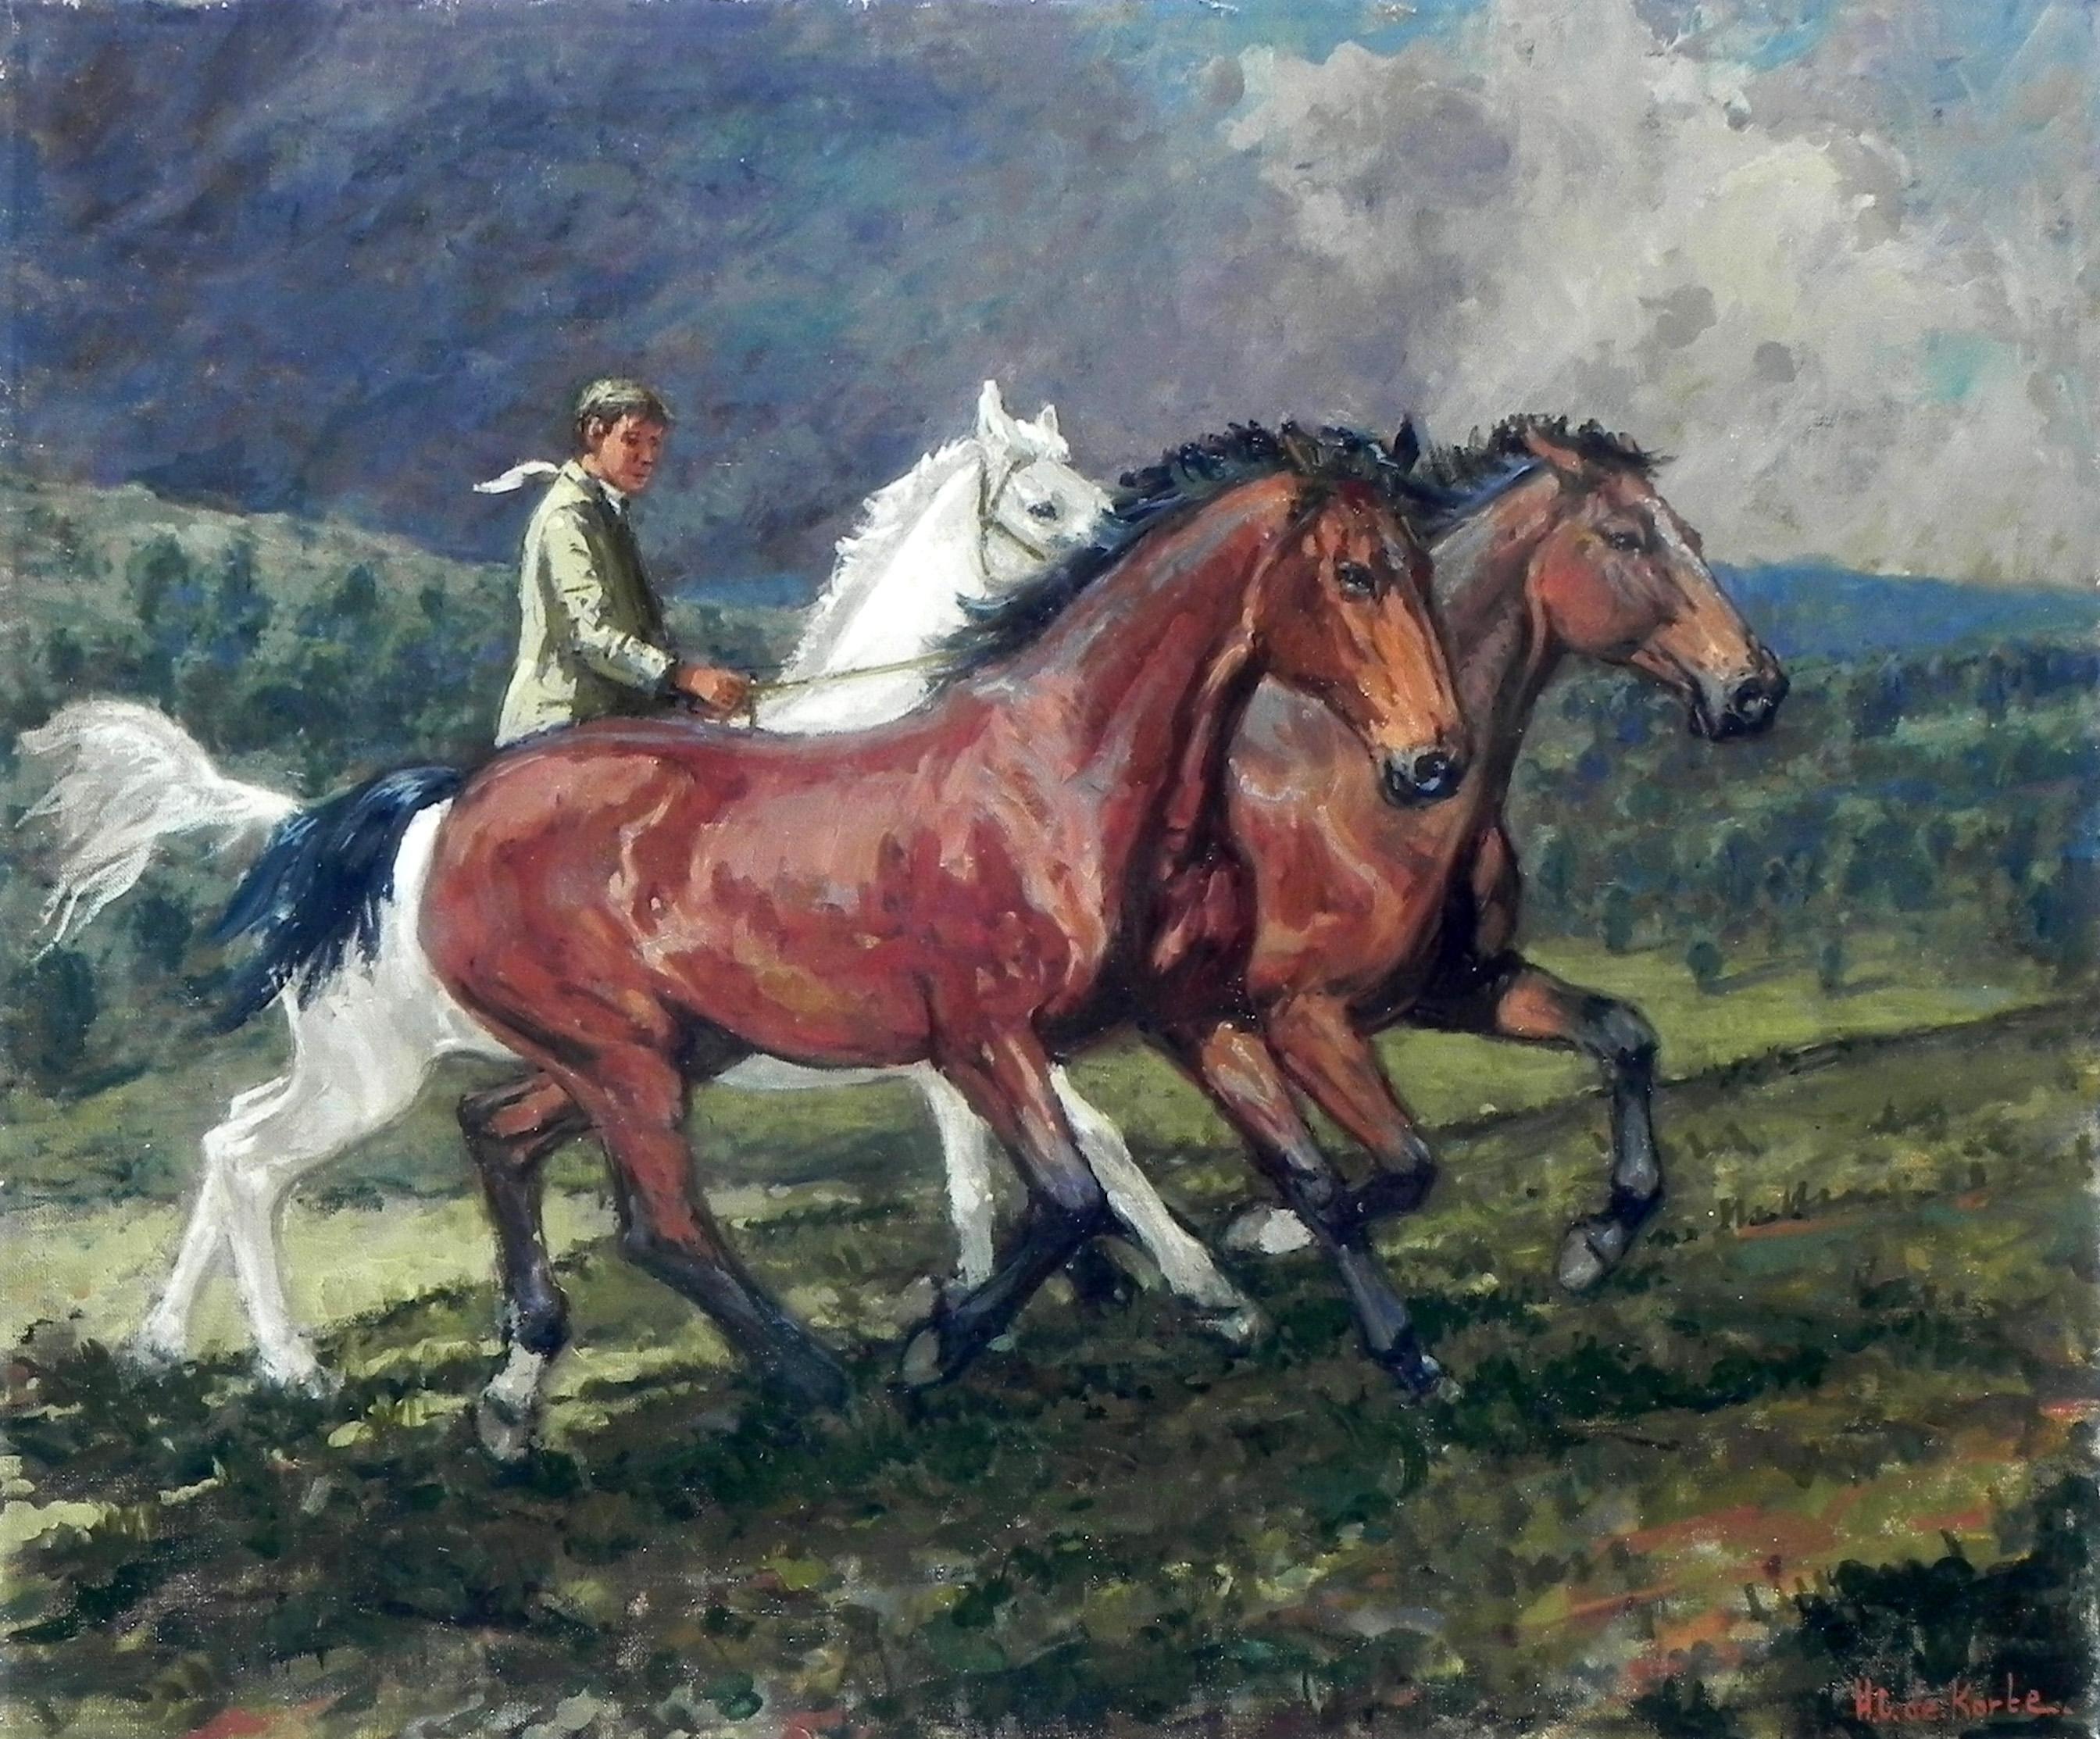 "Taming Wild Horses", Henni de Korte, 23x27 in, Oil on Canvas, Impressionism